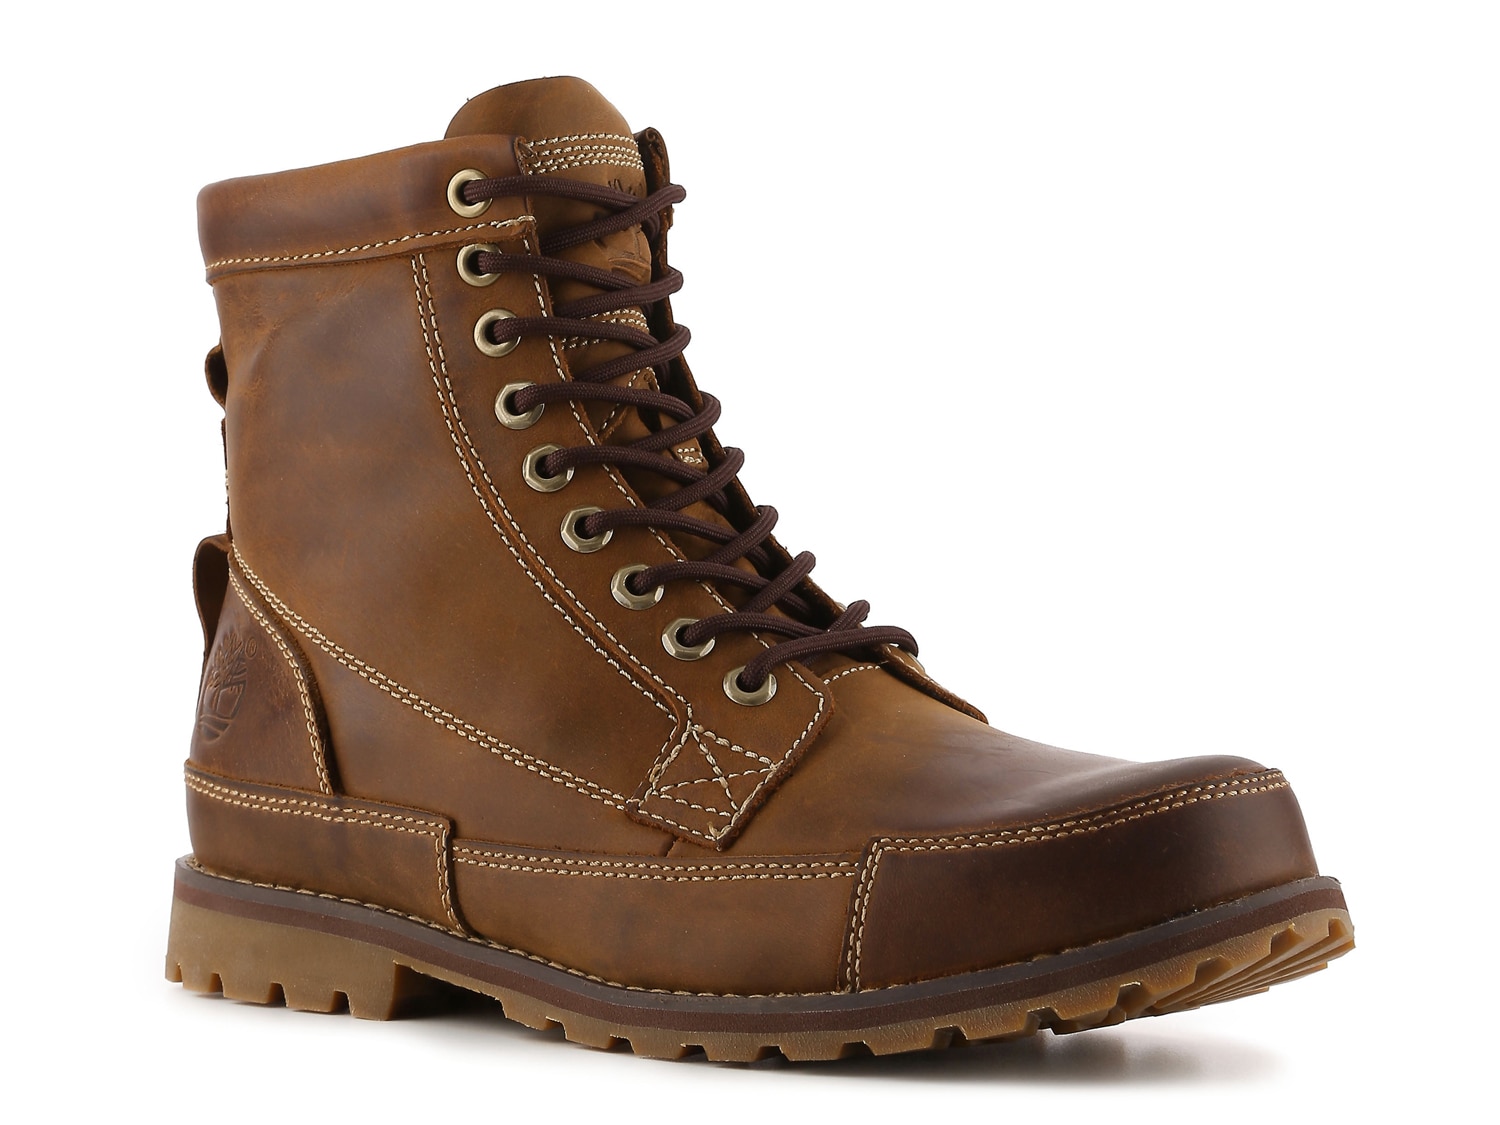 Timberland Earthkeepers Original Boot - Men's